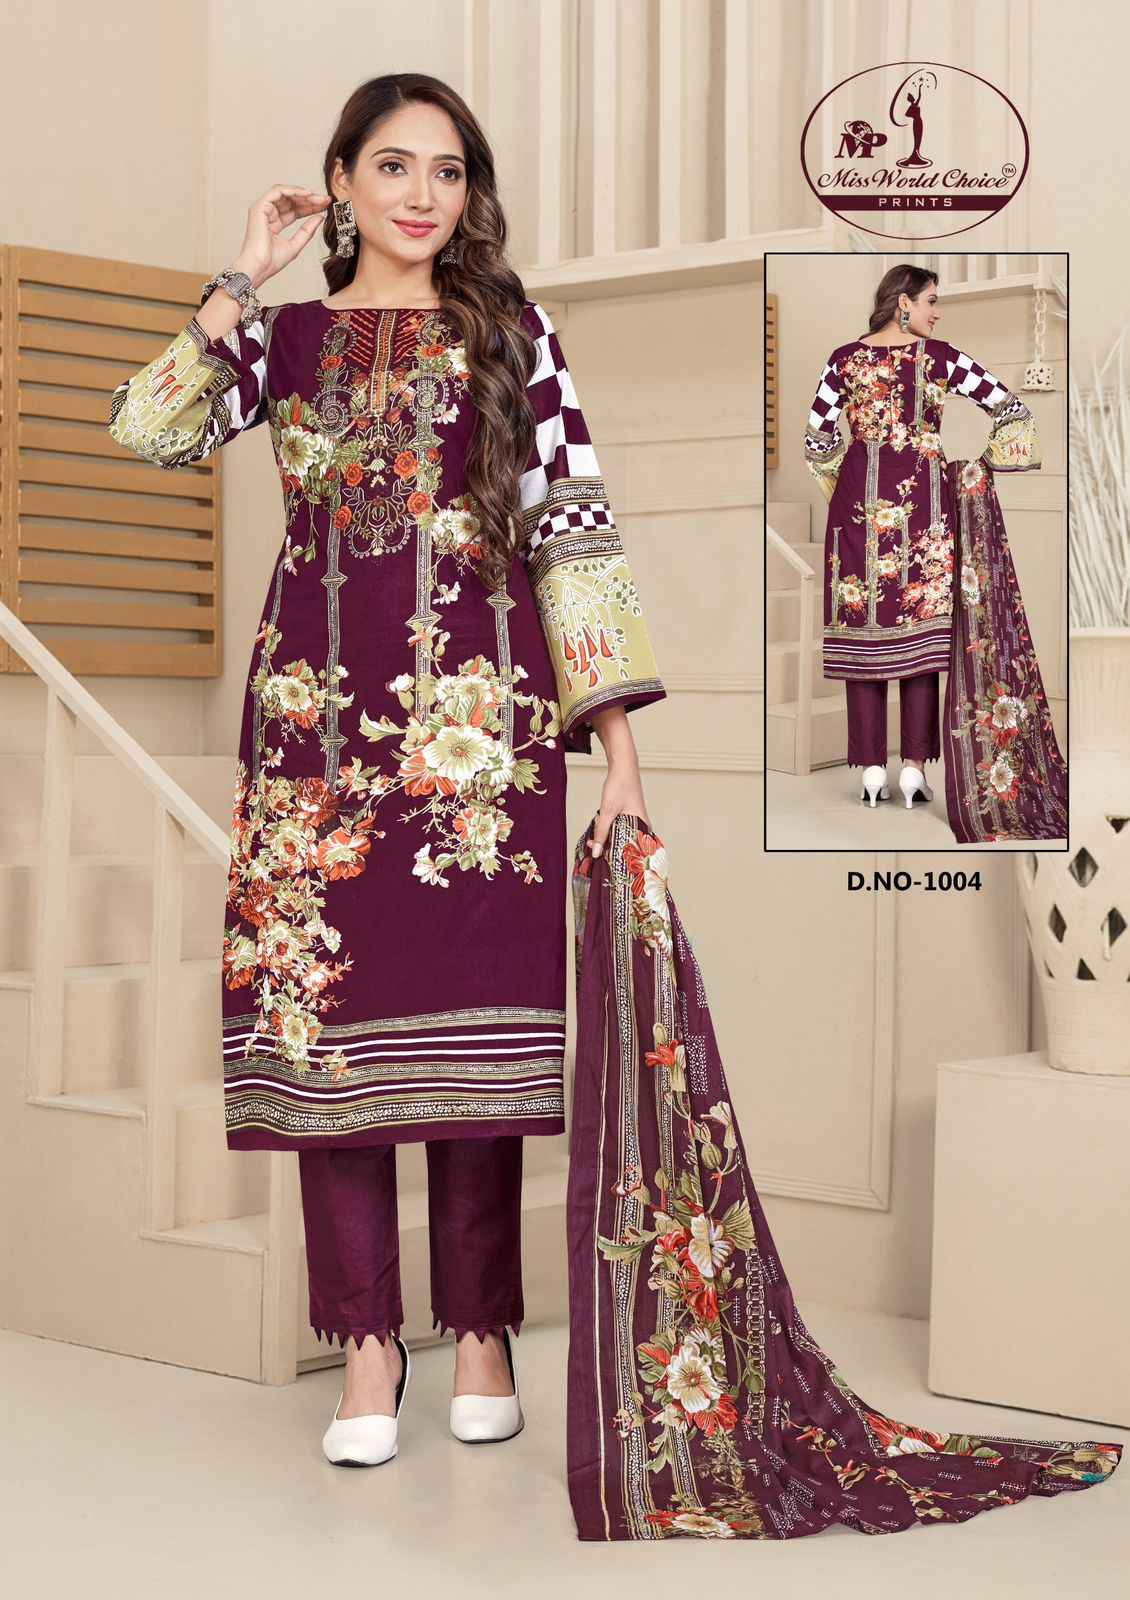 Missworld Choice Print Mahenoor Luxury Lawn Dress Material (8 Pc Catalog)